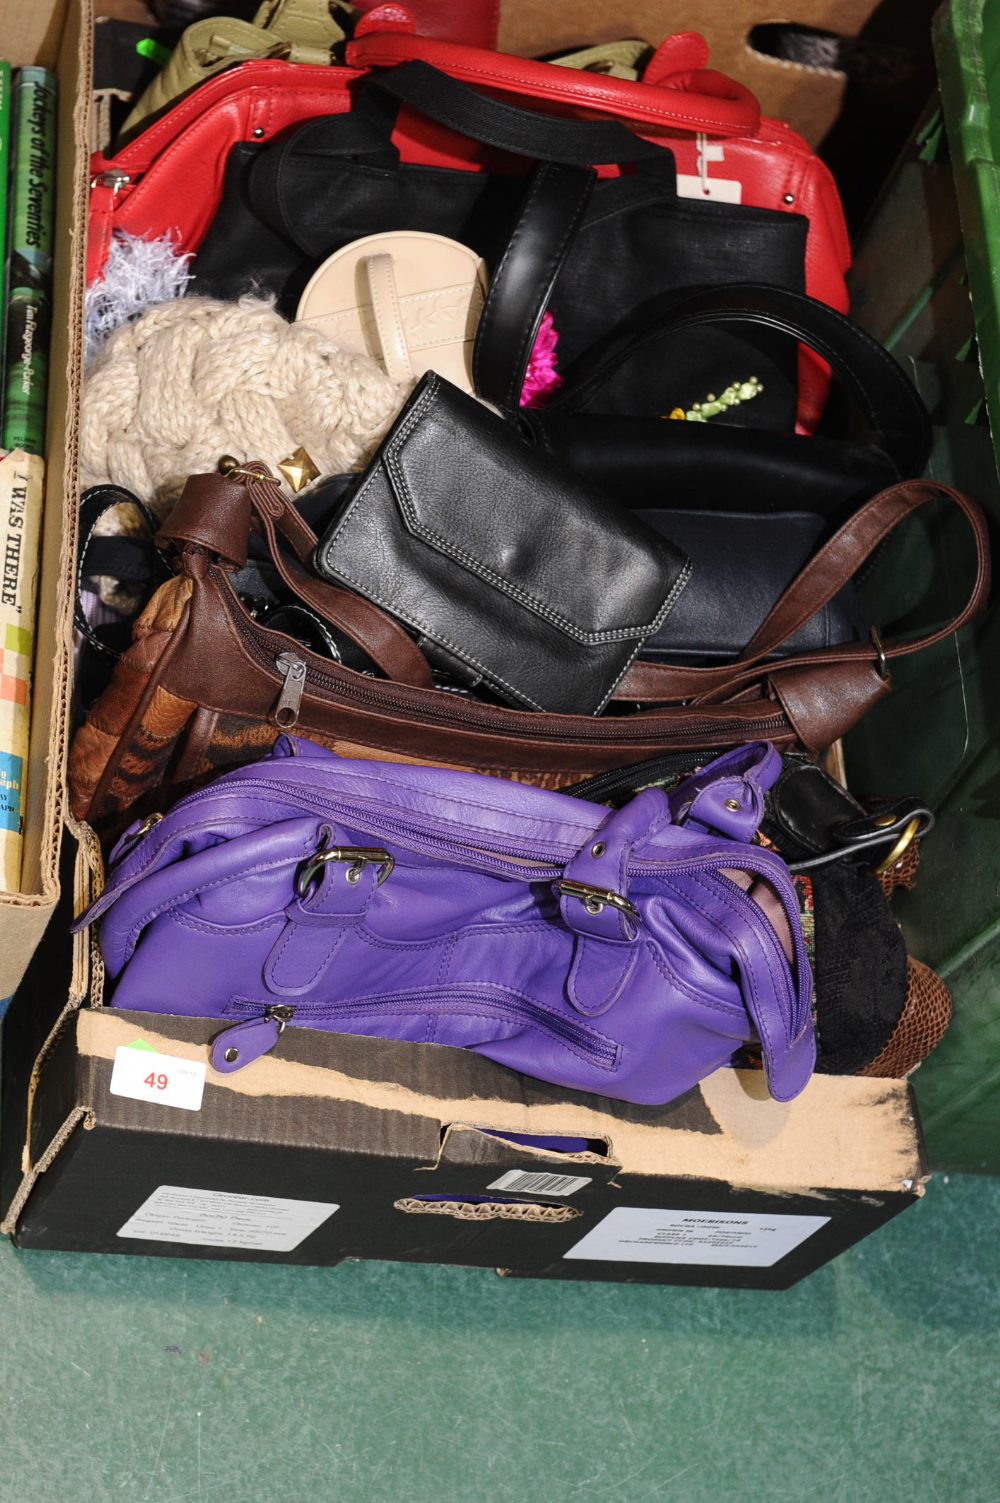 A box of vintage handbags